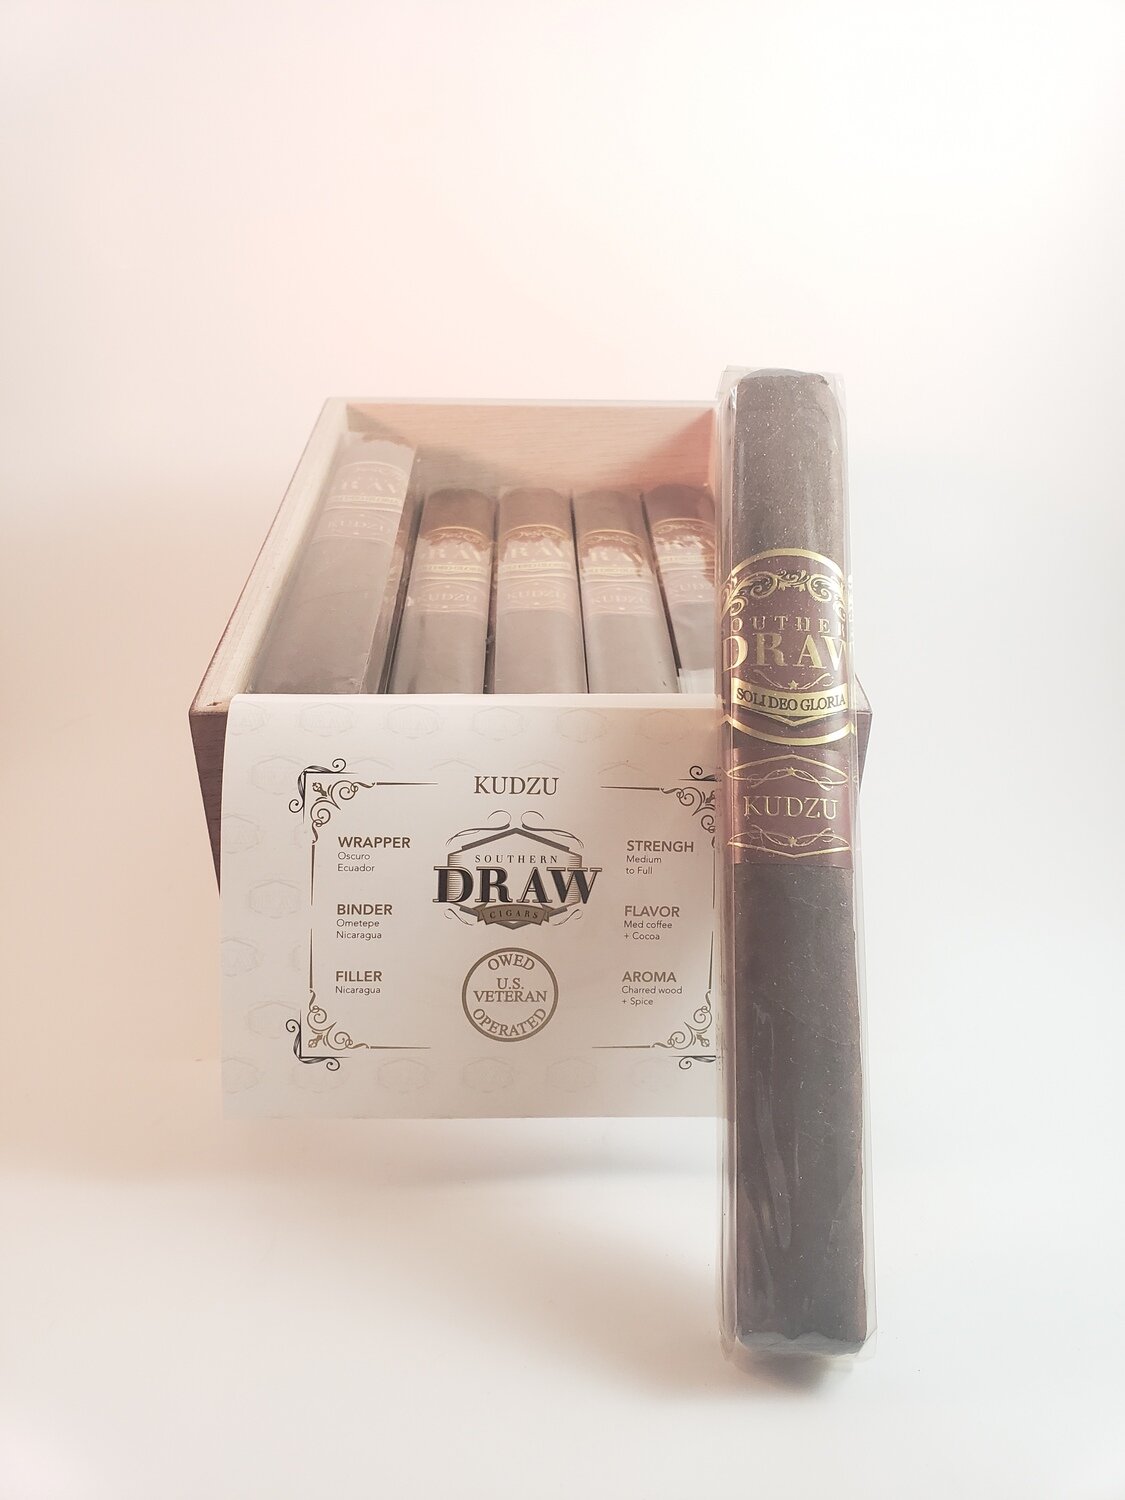 Southern Draw Kudzu Oscuro Toro 6 x 52 Single Cigar